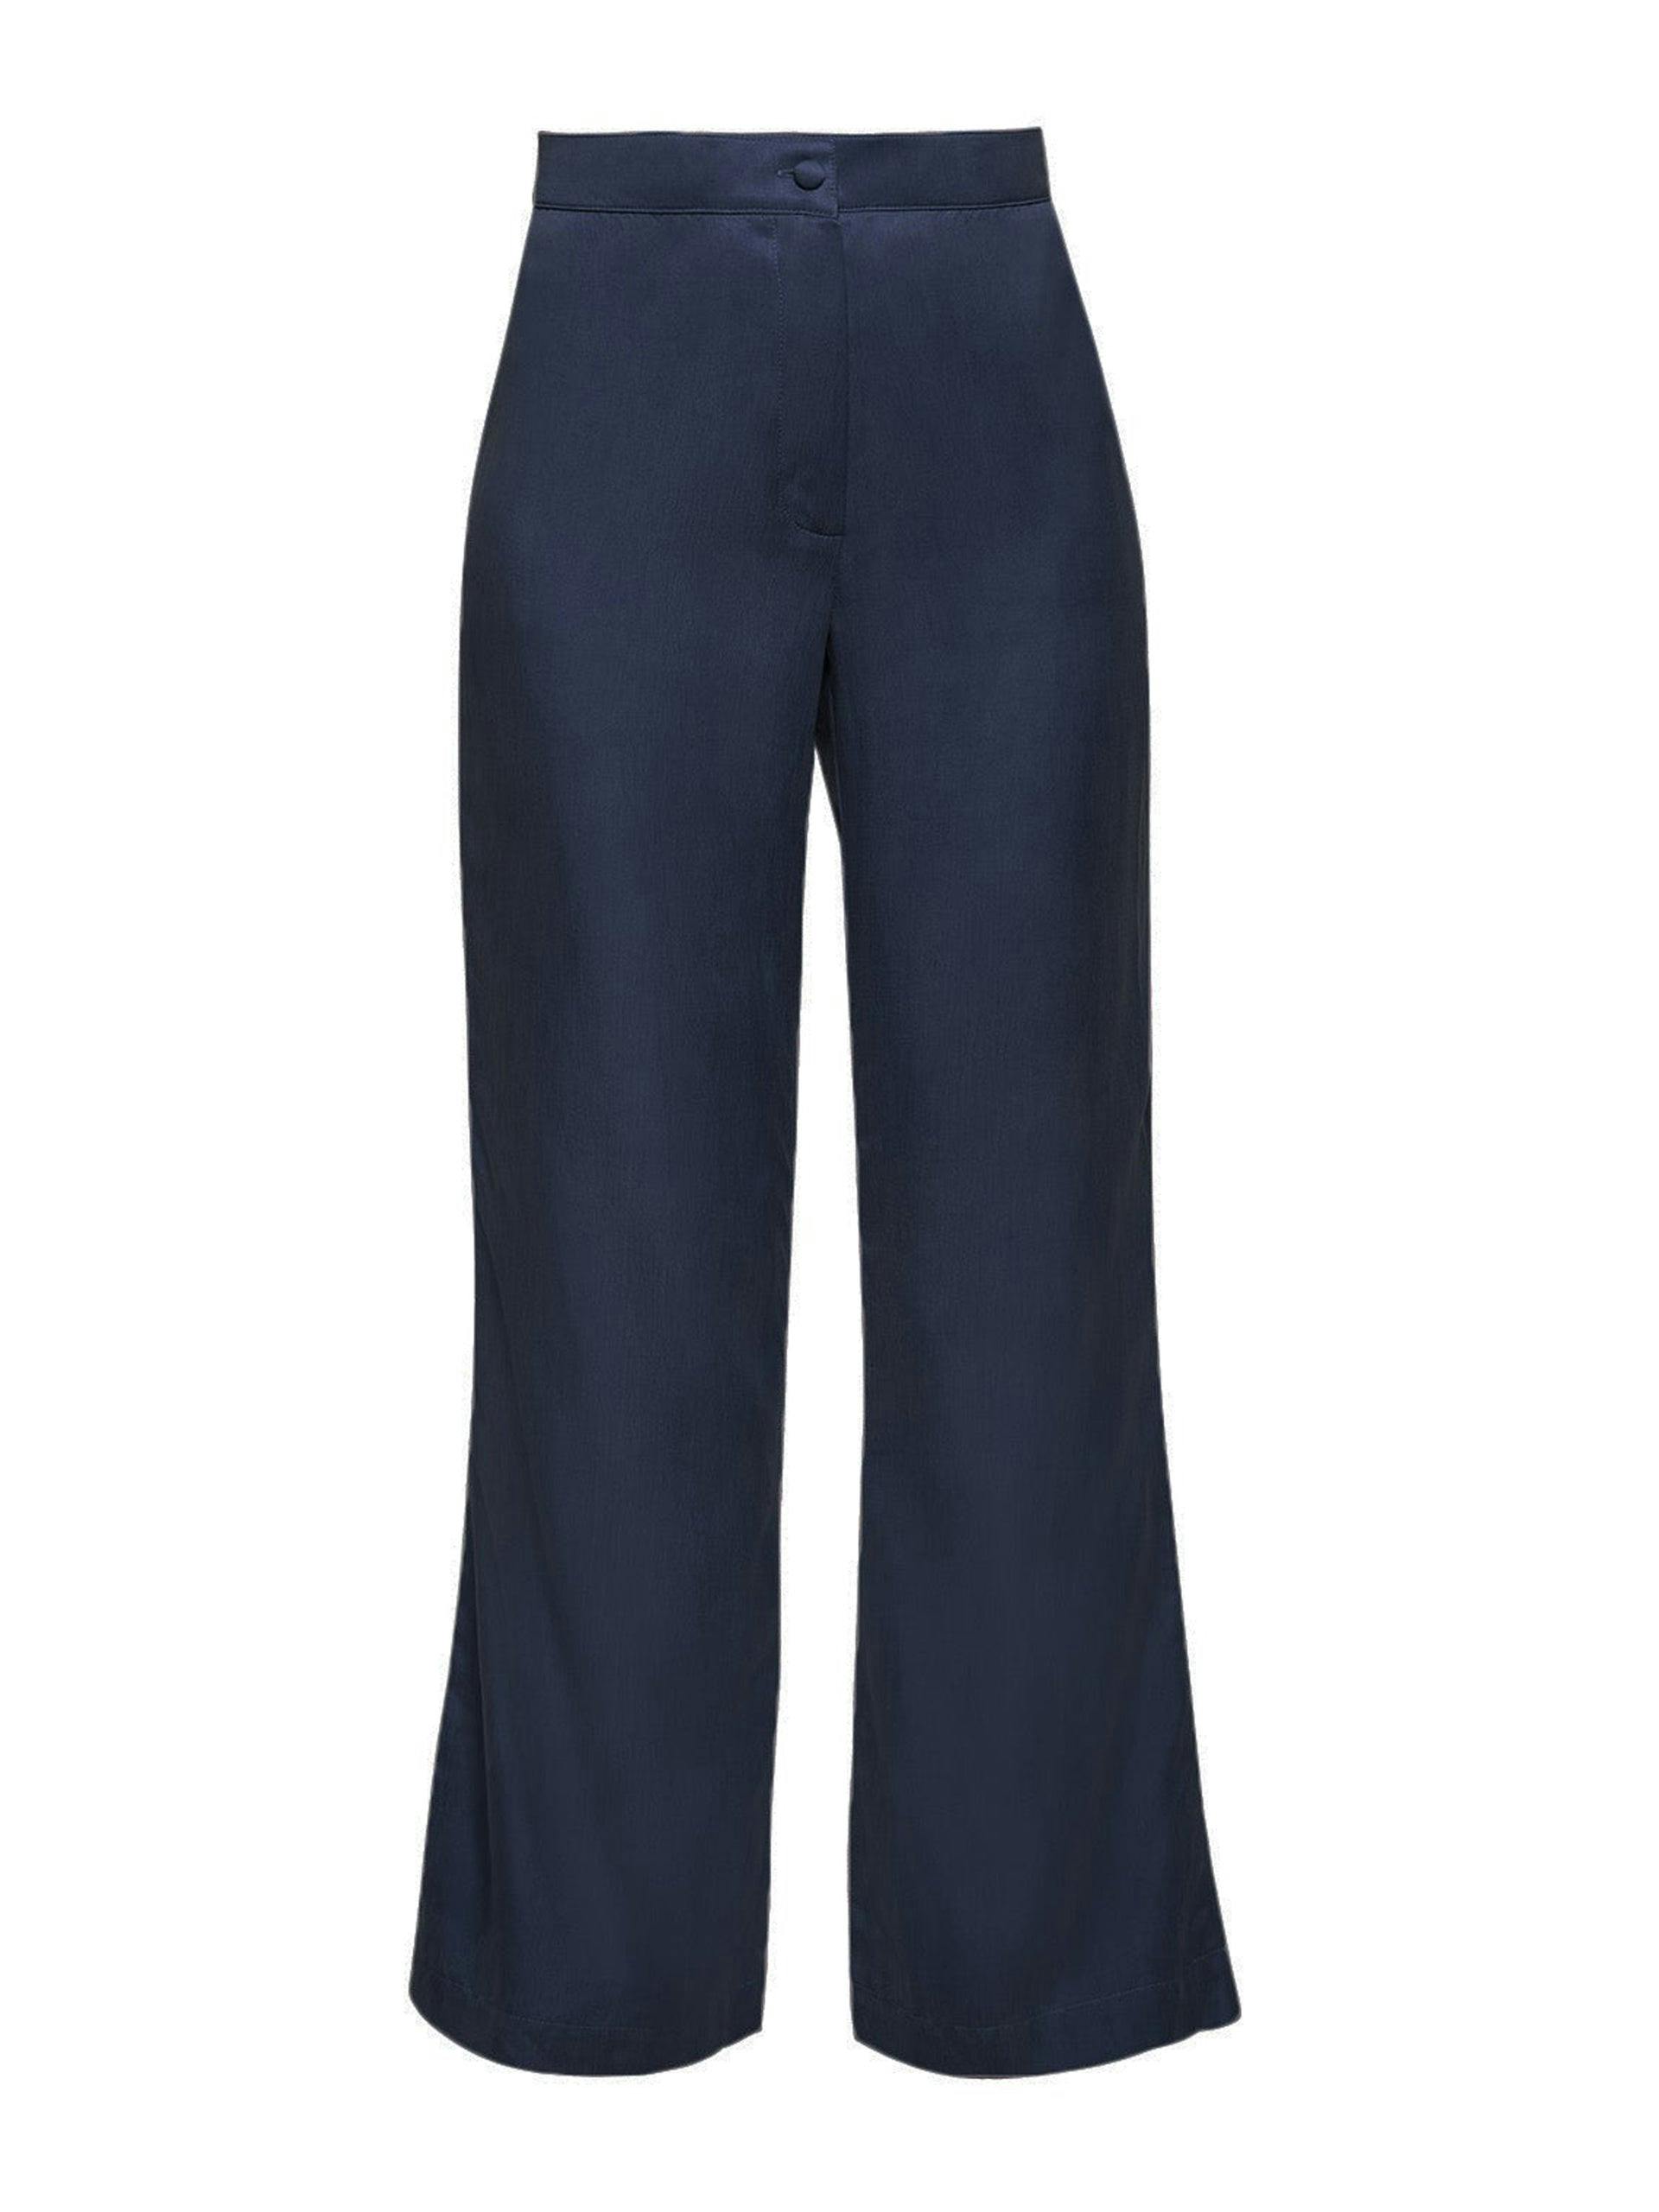 Dalia navy blue silky trousers